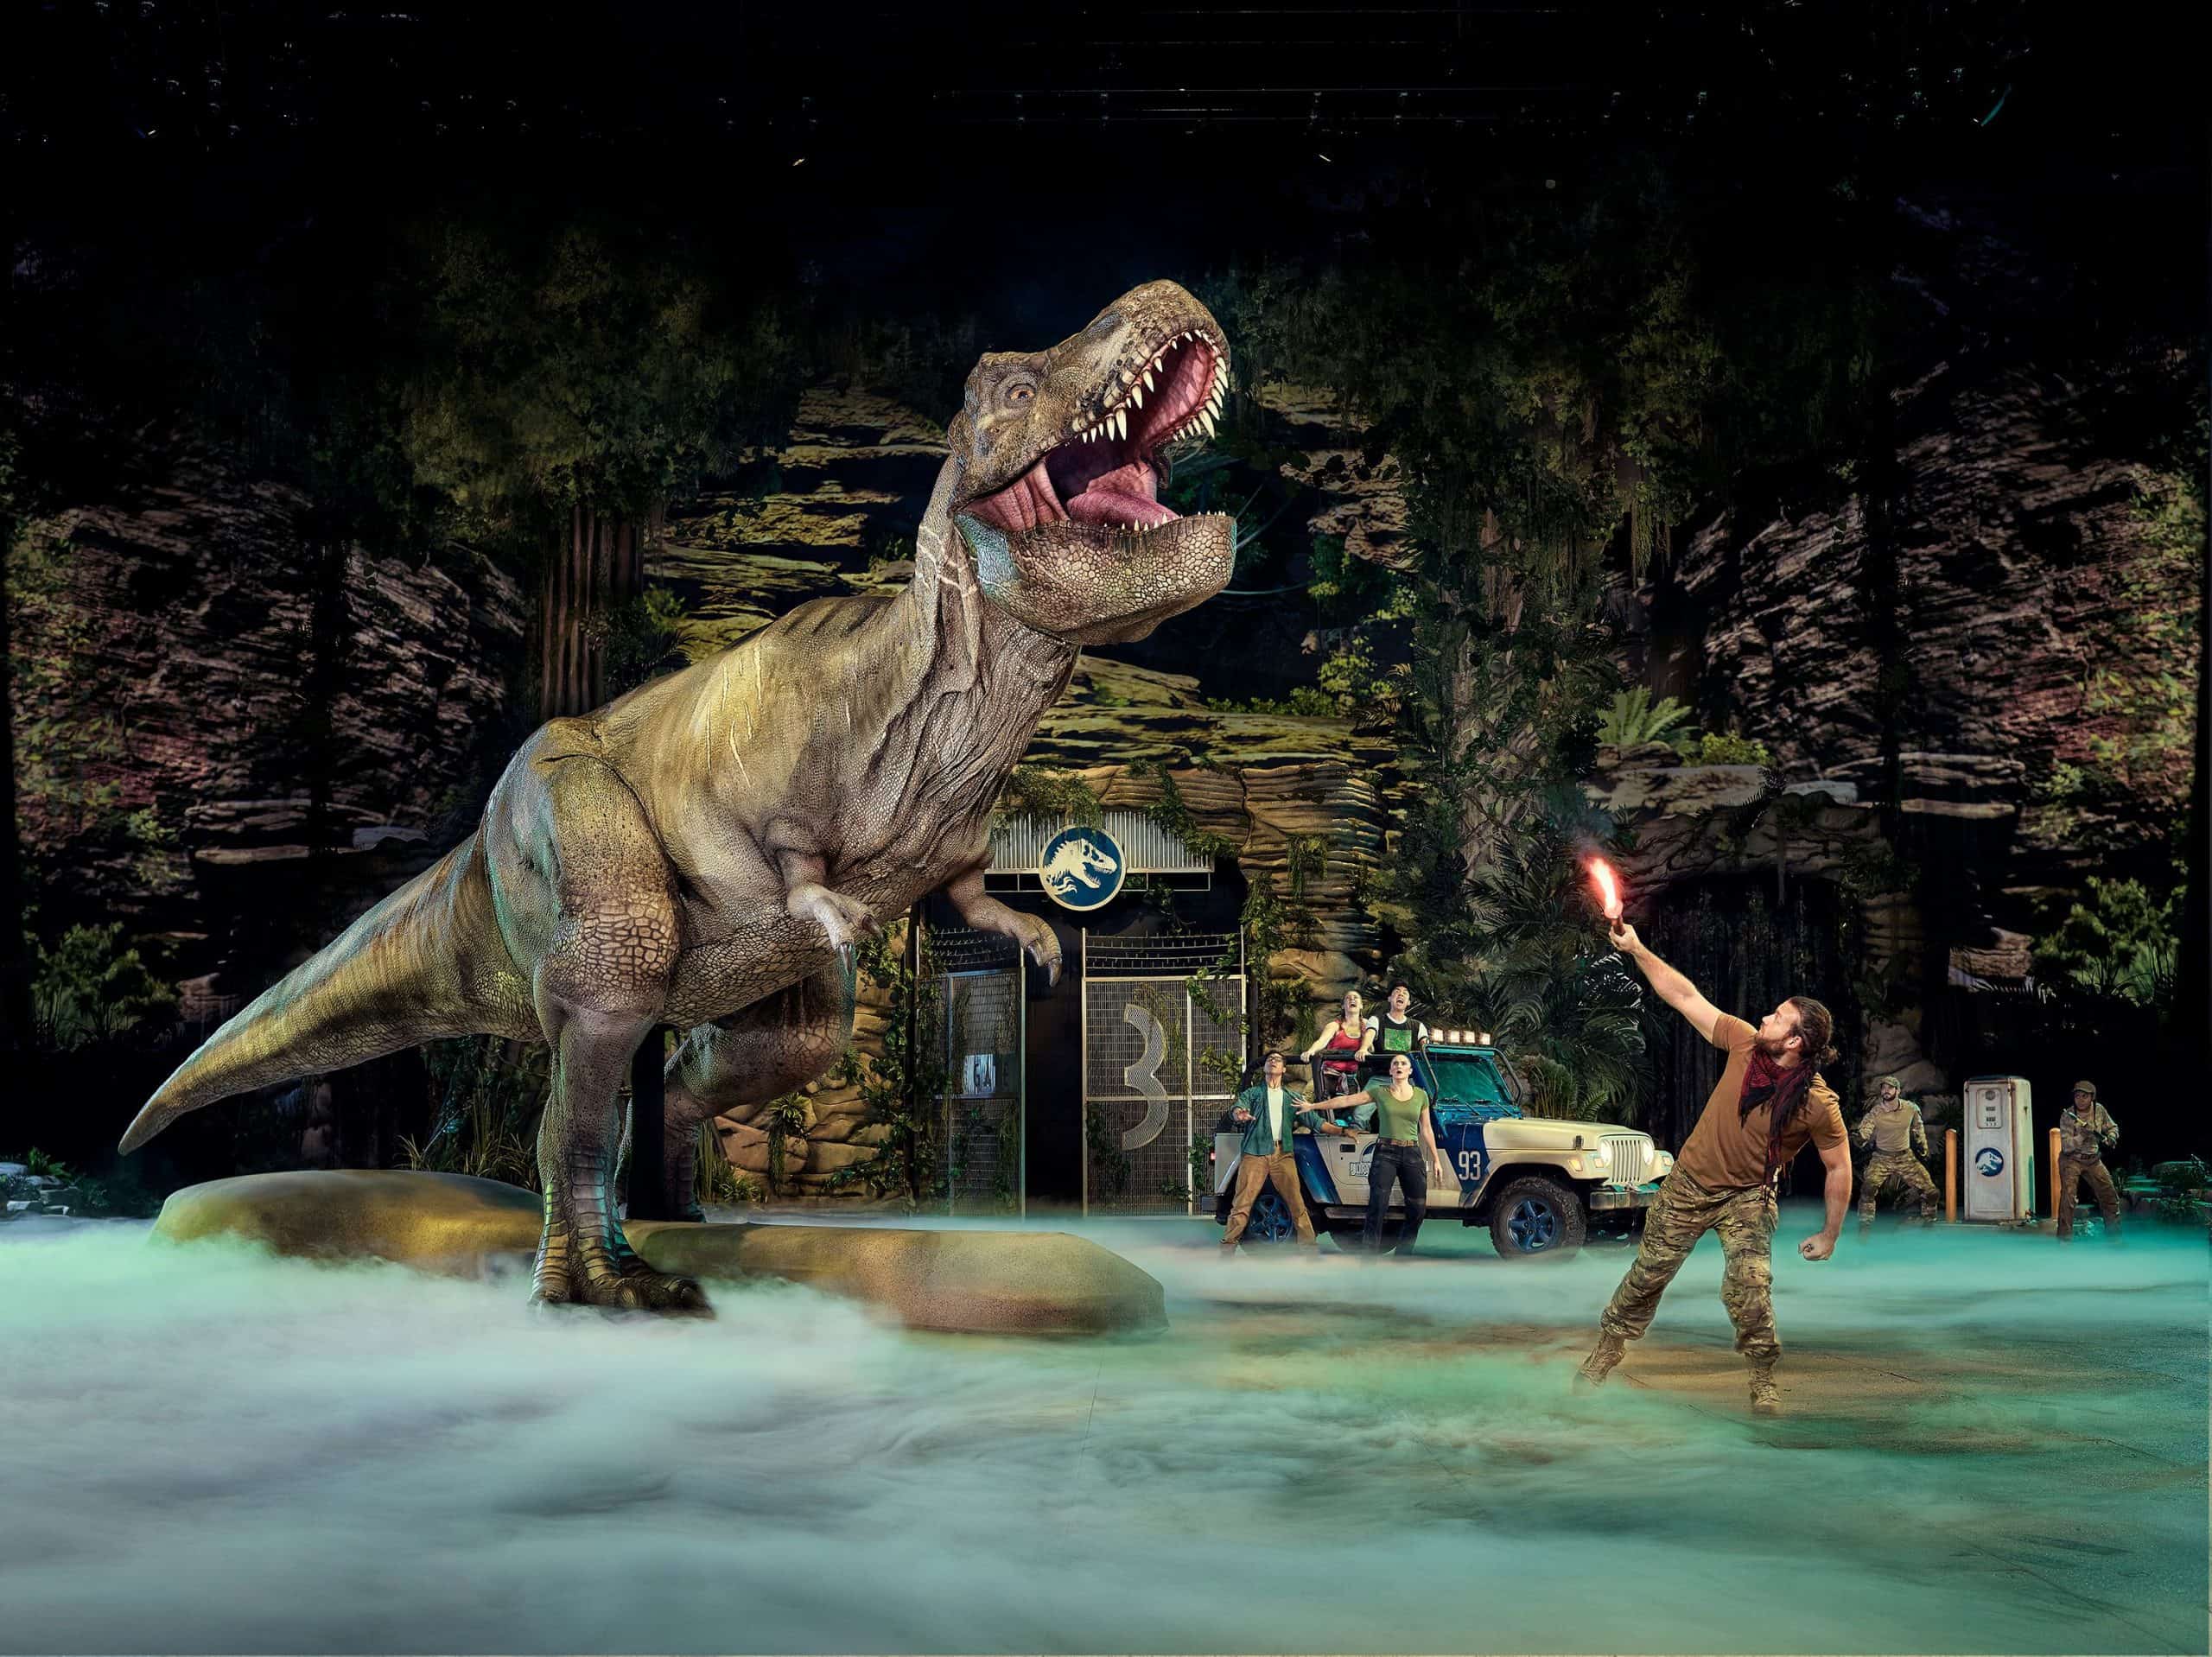 Jurassic World Live Tour 'roars' into Hamilton this fall